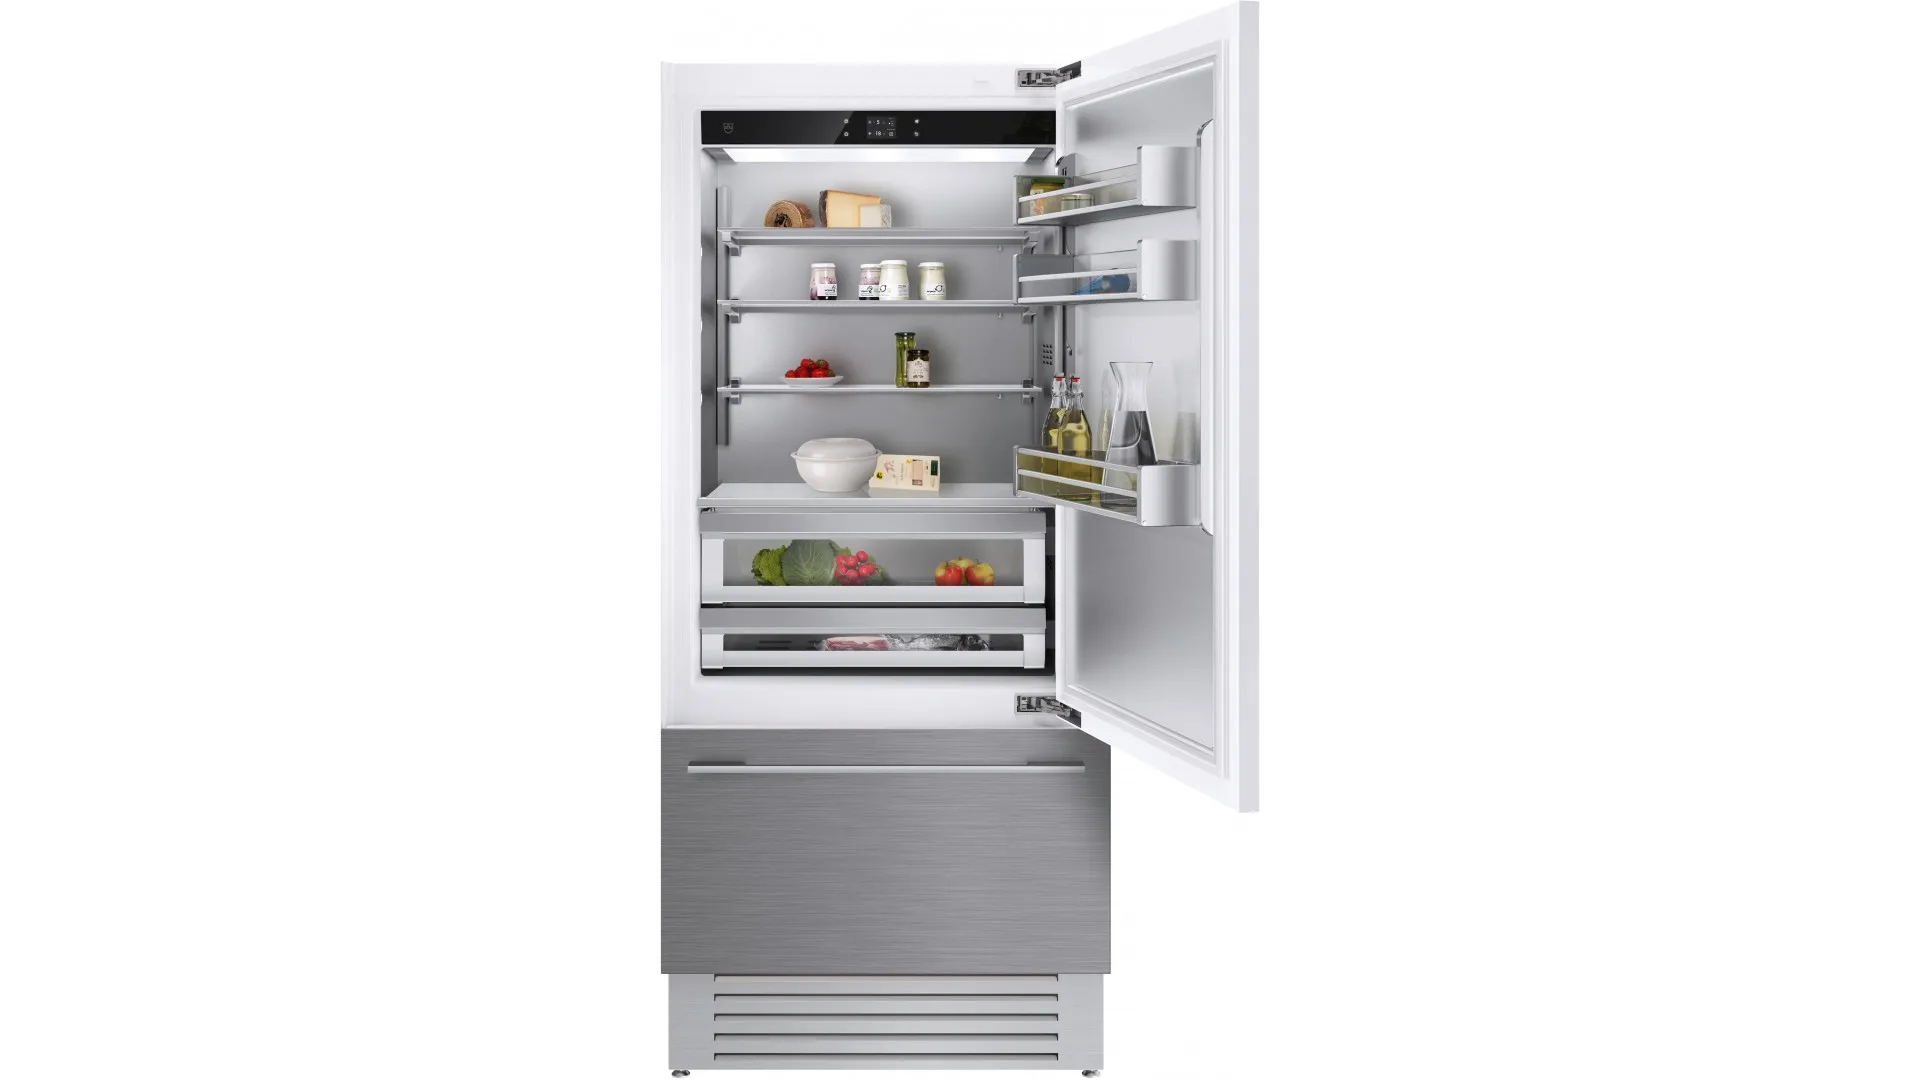 V6000 SUPREME monofridge refrigerator / frezeer